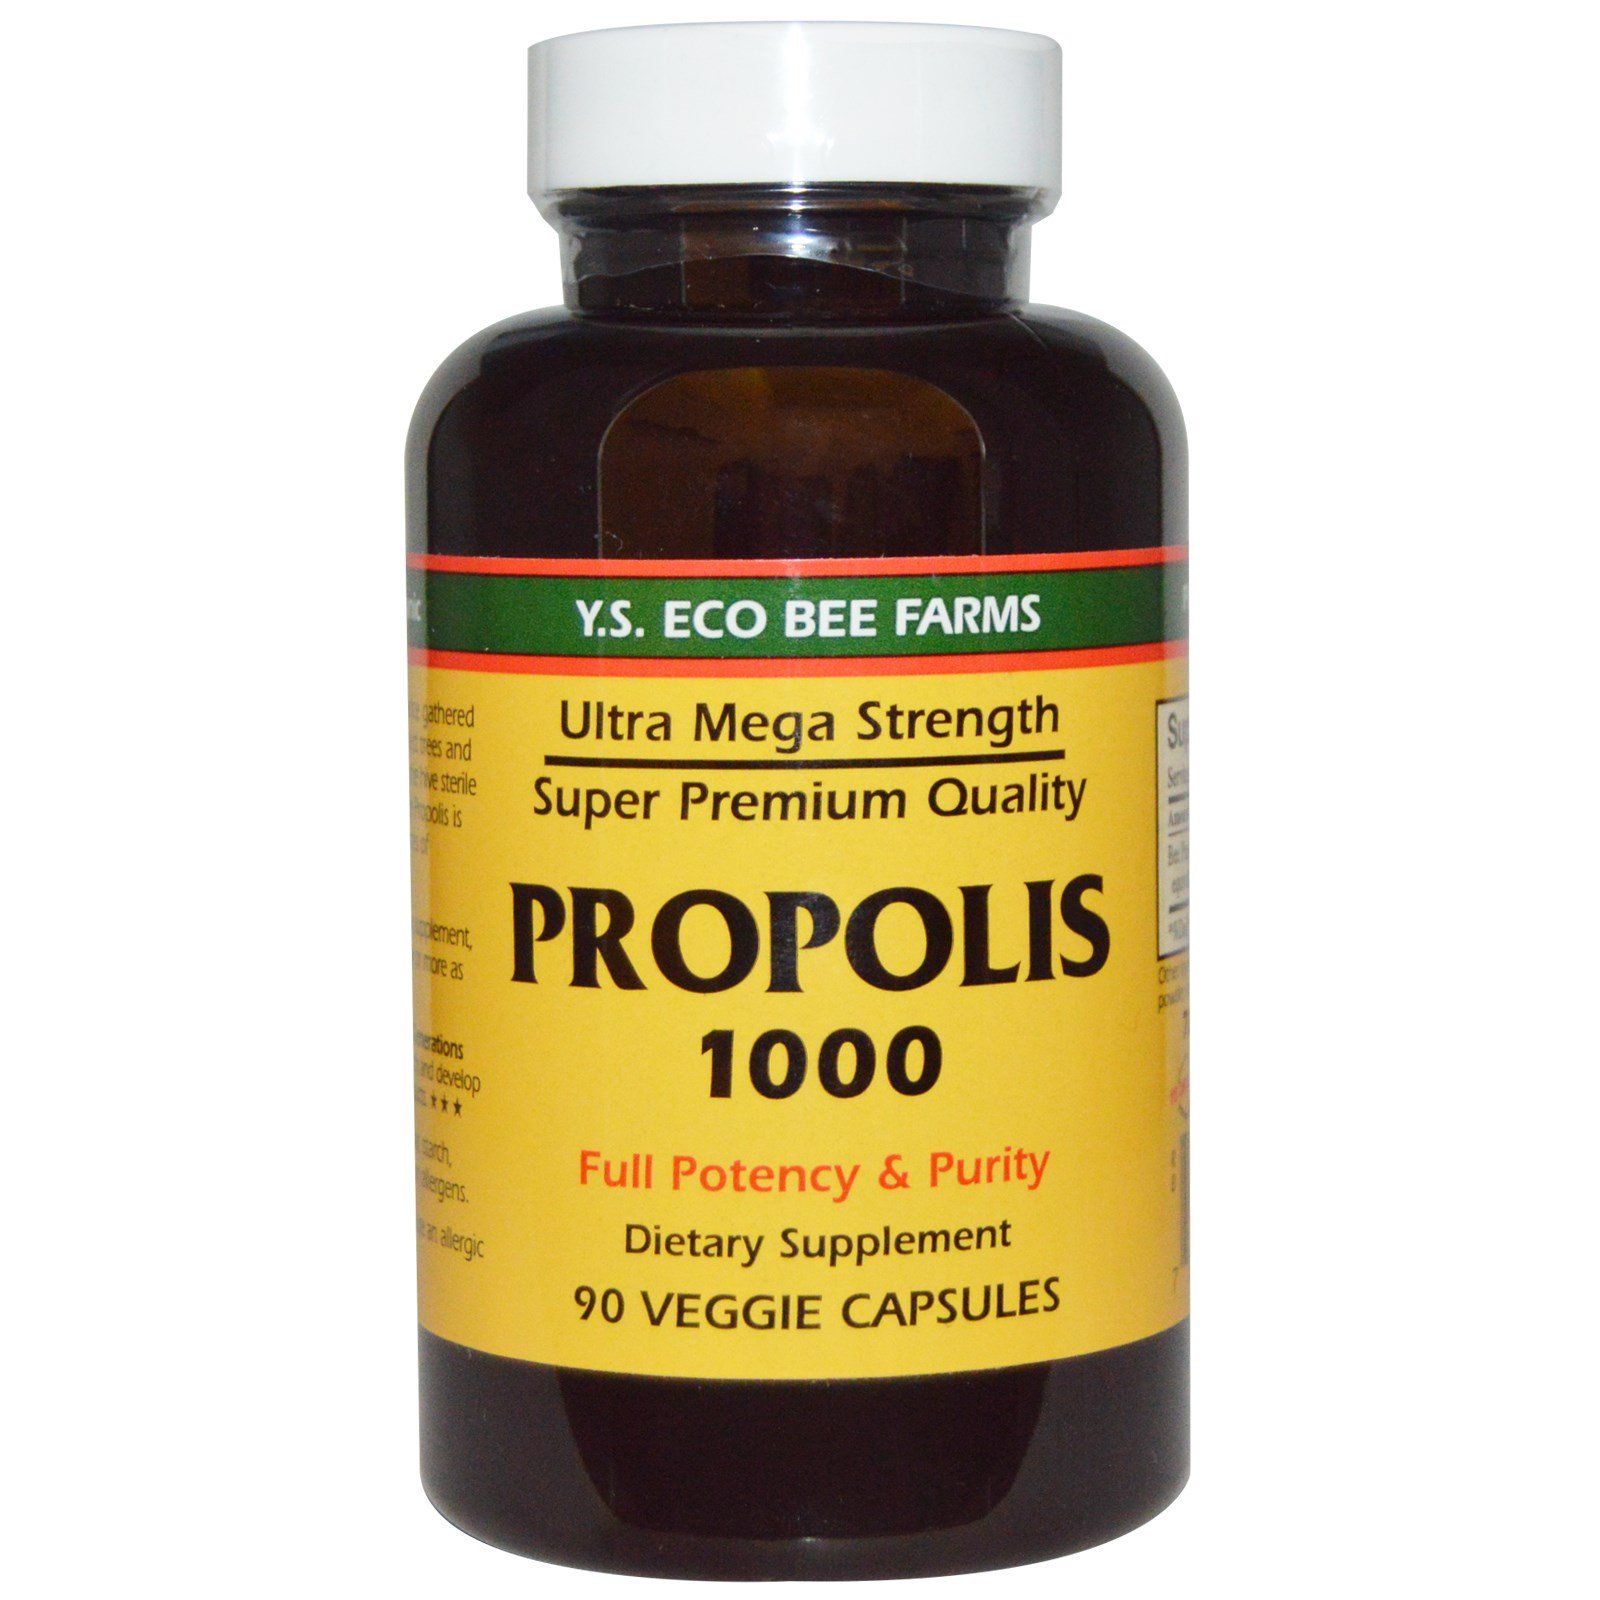 Y.S. Eco Bee Farms Прополис 1000 500 mg 90 овощных капсул y s eco bee farms чистый гвоздичный мед премиум качества 16 унций 454 г